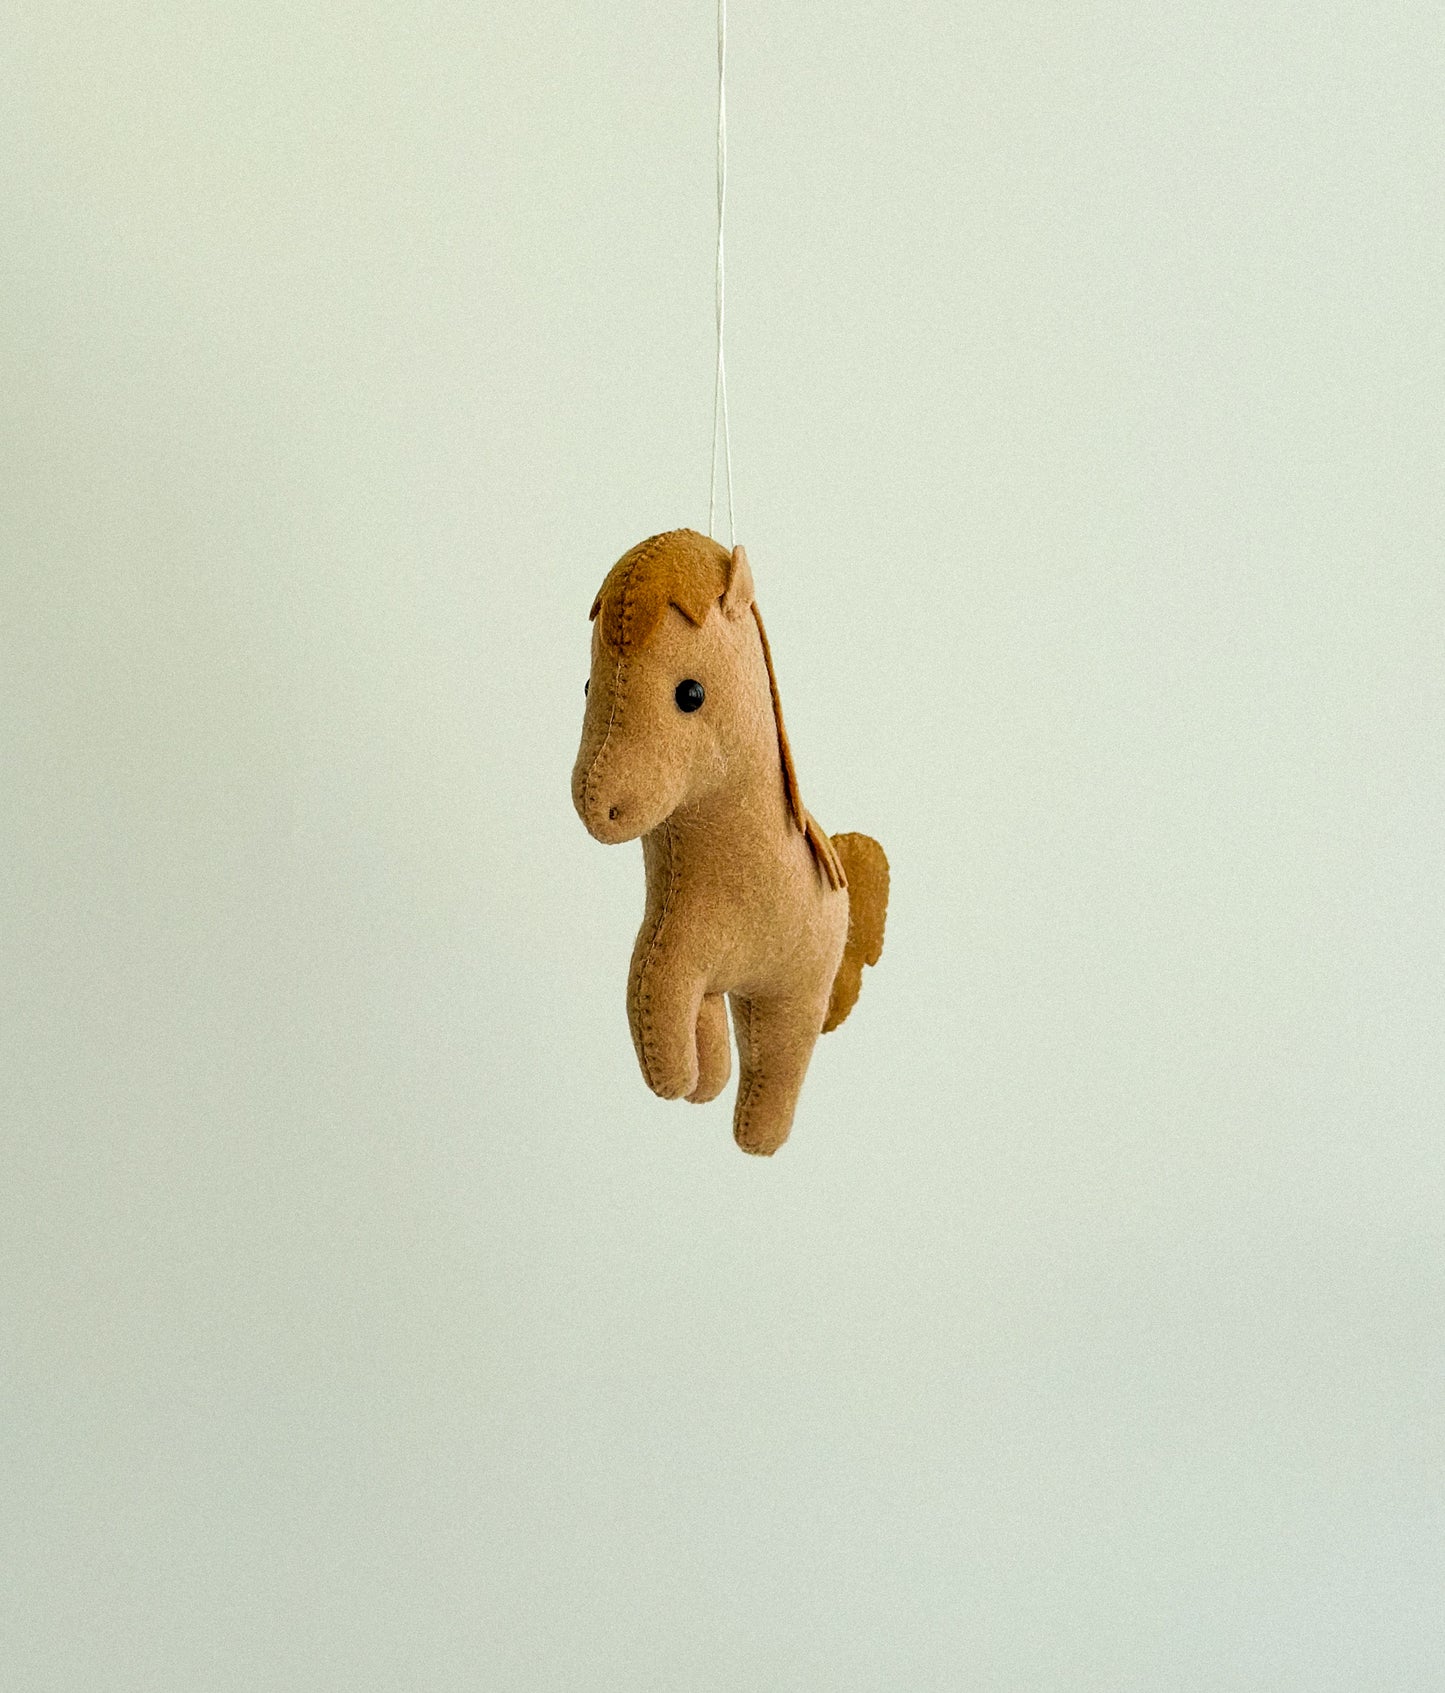 Handcrafted Felt Horse Ornament